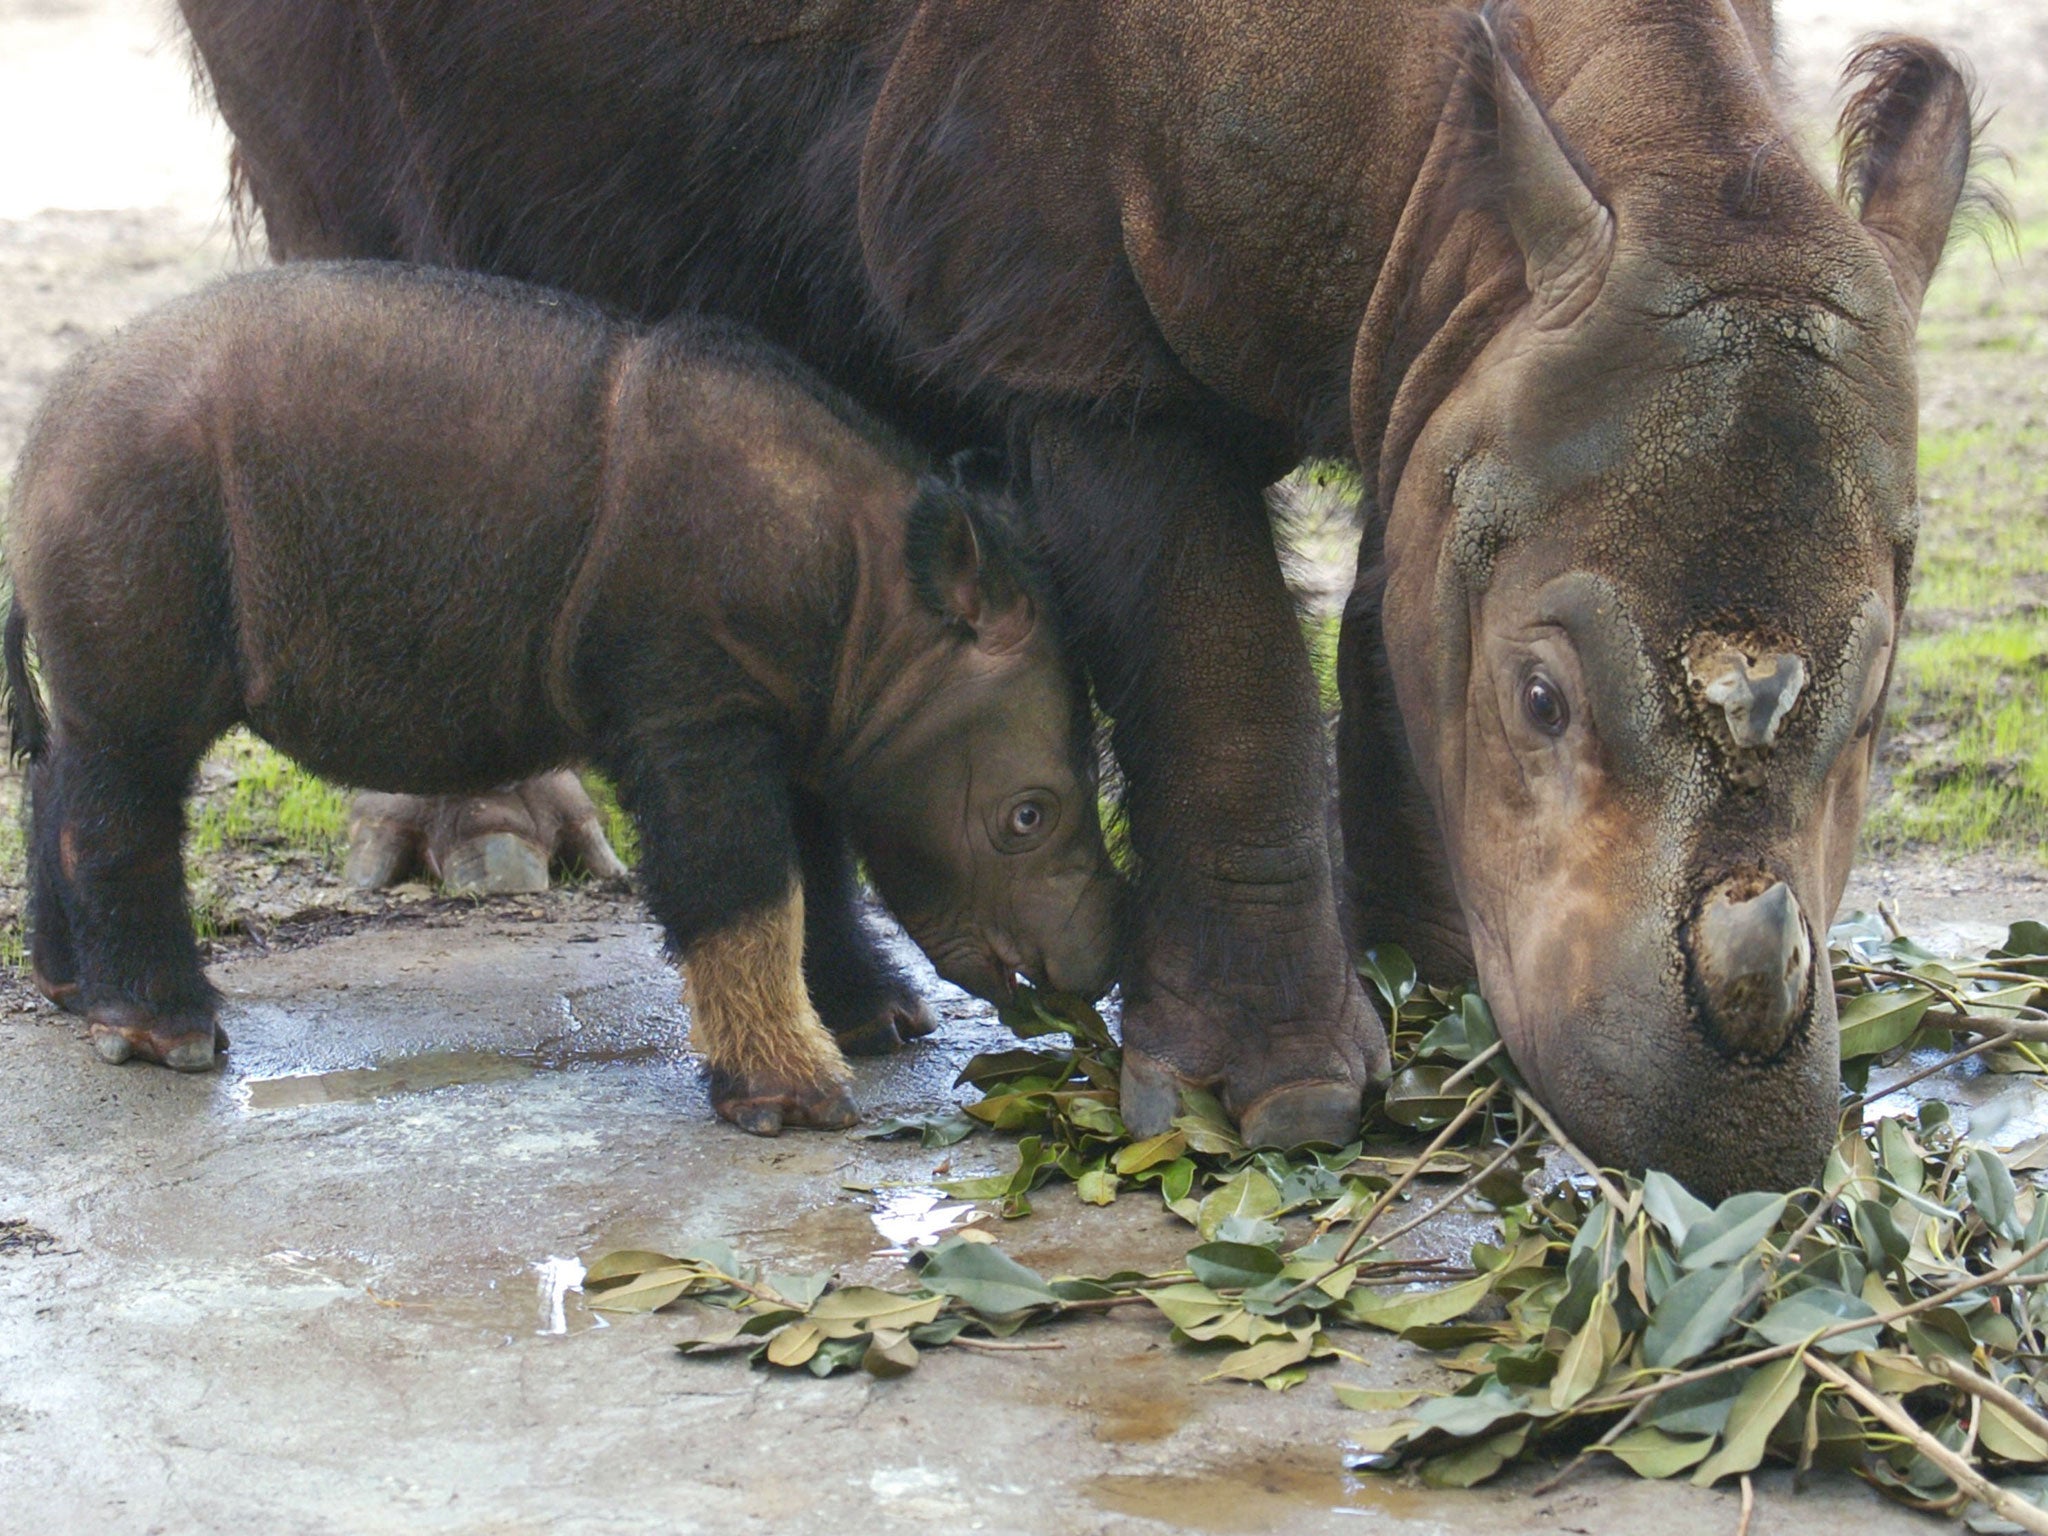 Sumatran rhinos have been declared extinct in Malaysia